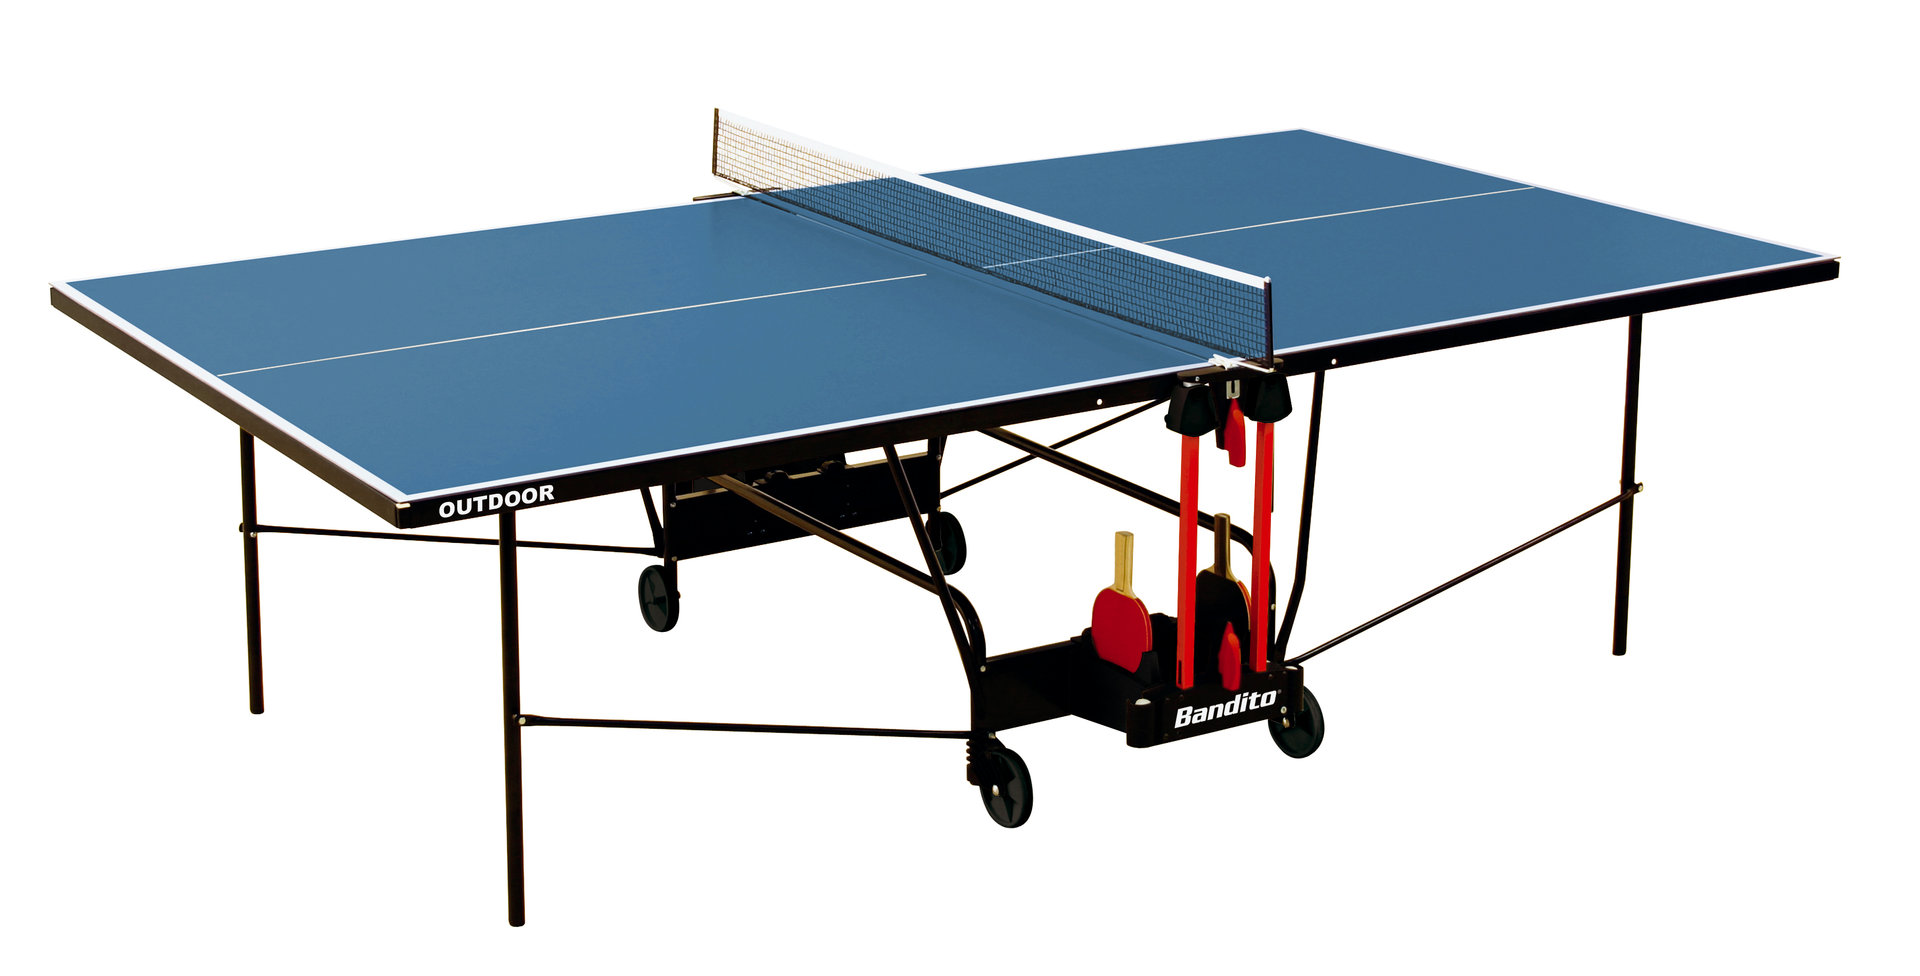 Bandito Outdoor Ping-Pong table